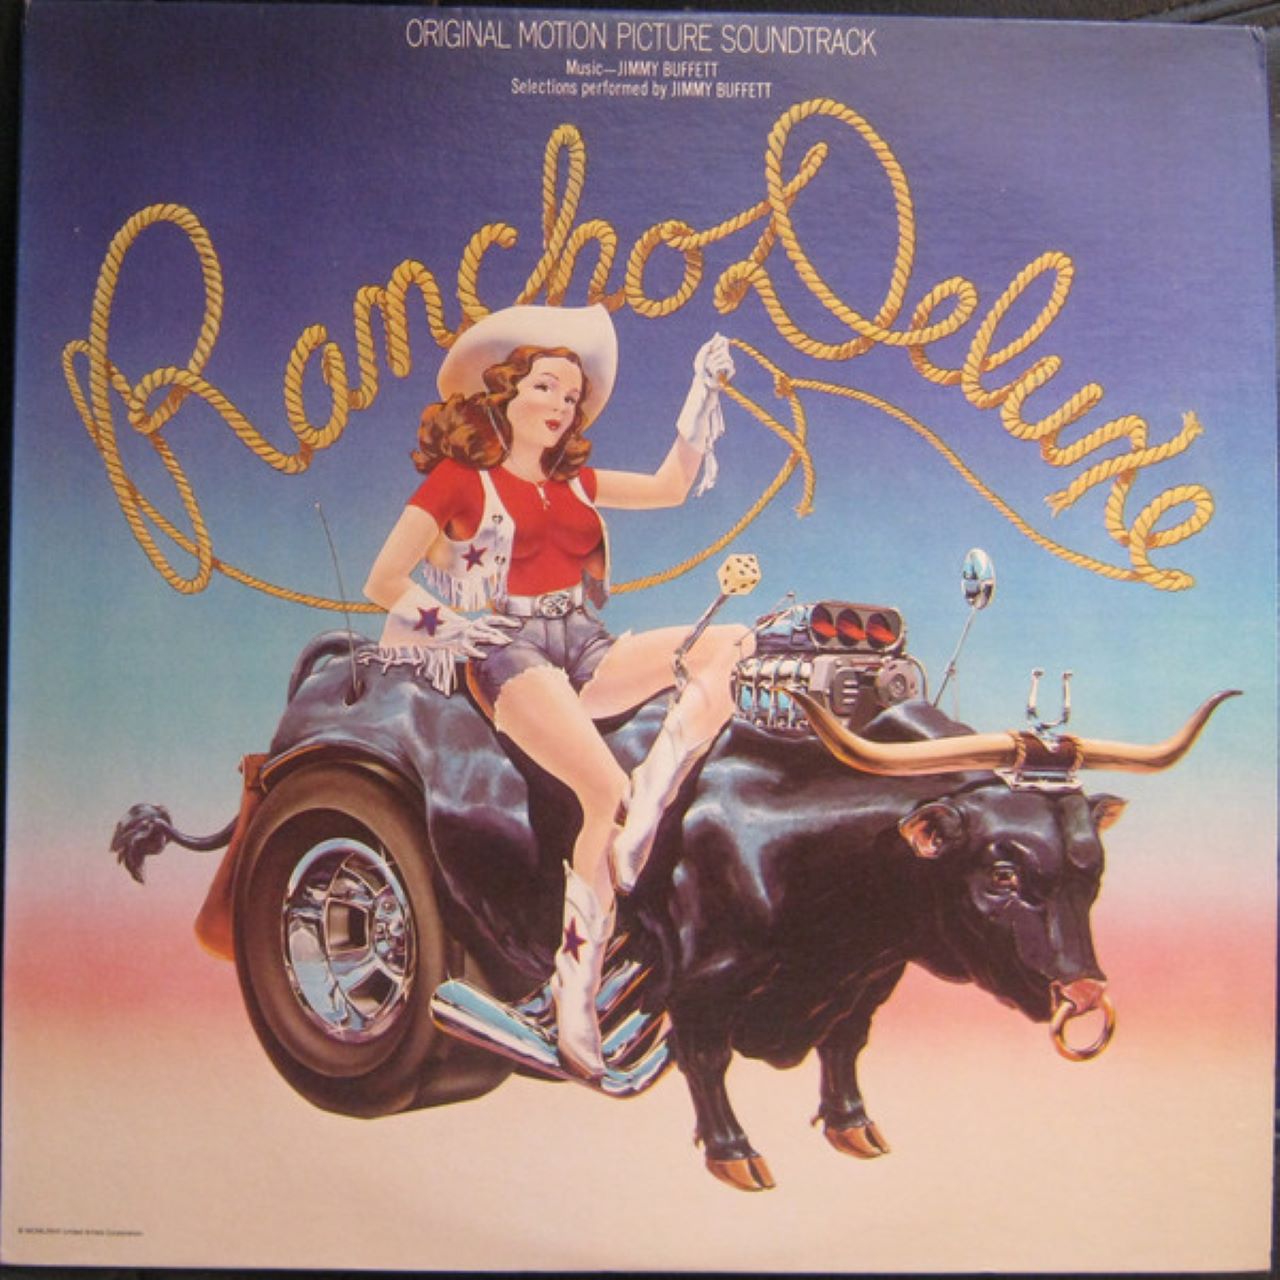 Jimmy Buffett - Rancho Deluxe cover album